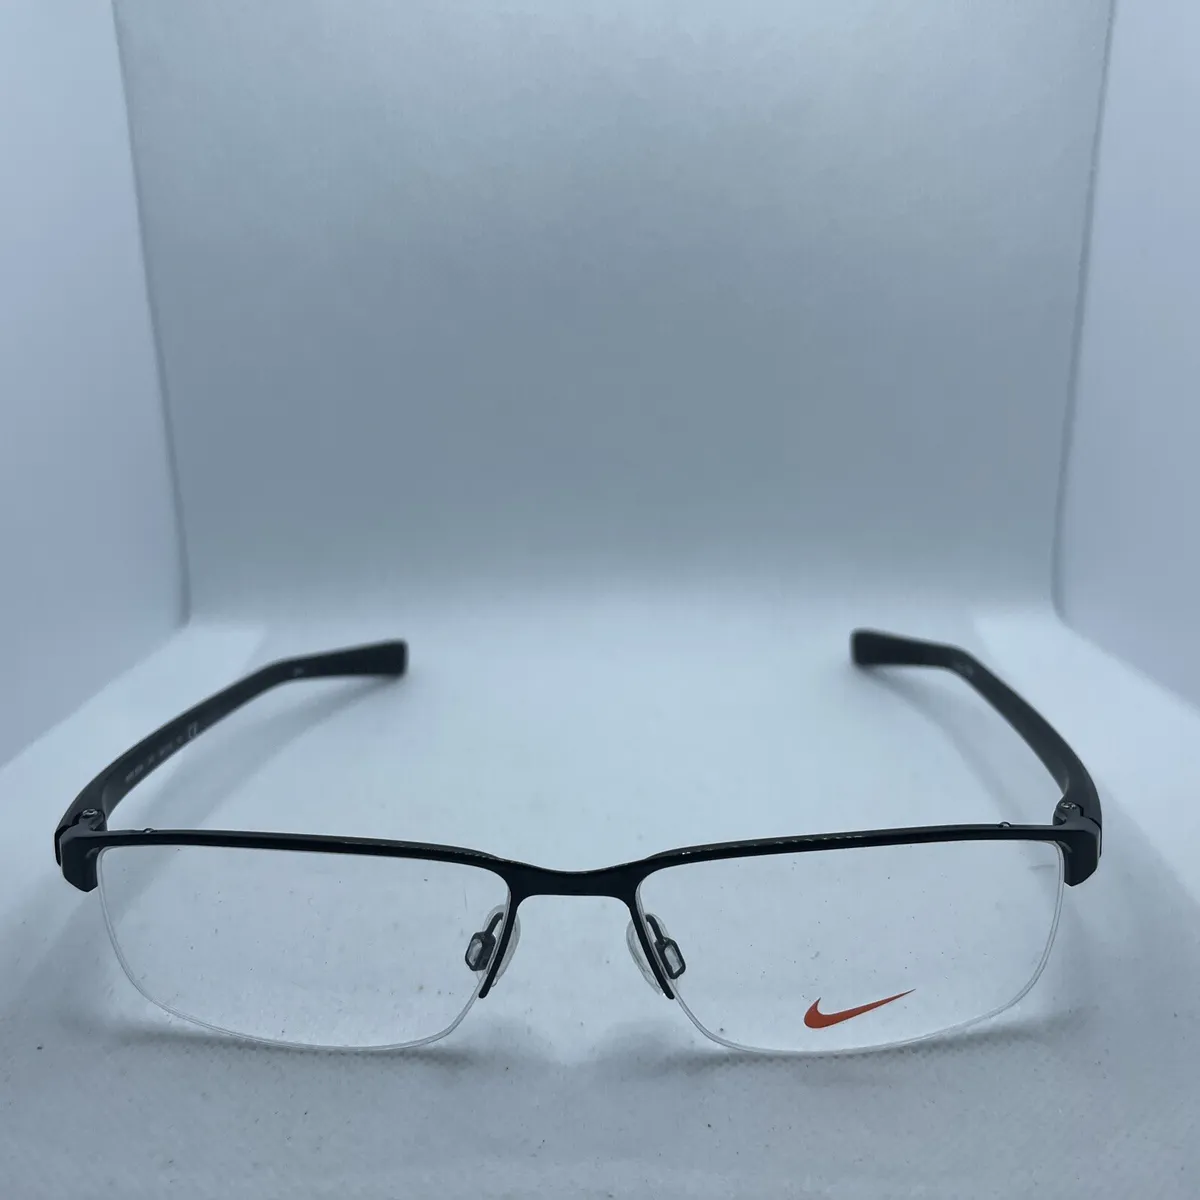 Cha Hacia abajo Filosófico Nike 8098 010 56/16 140 Black Men Eyeglass Frames M38 | eBay